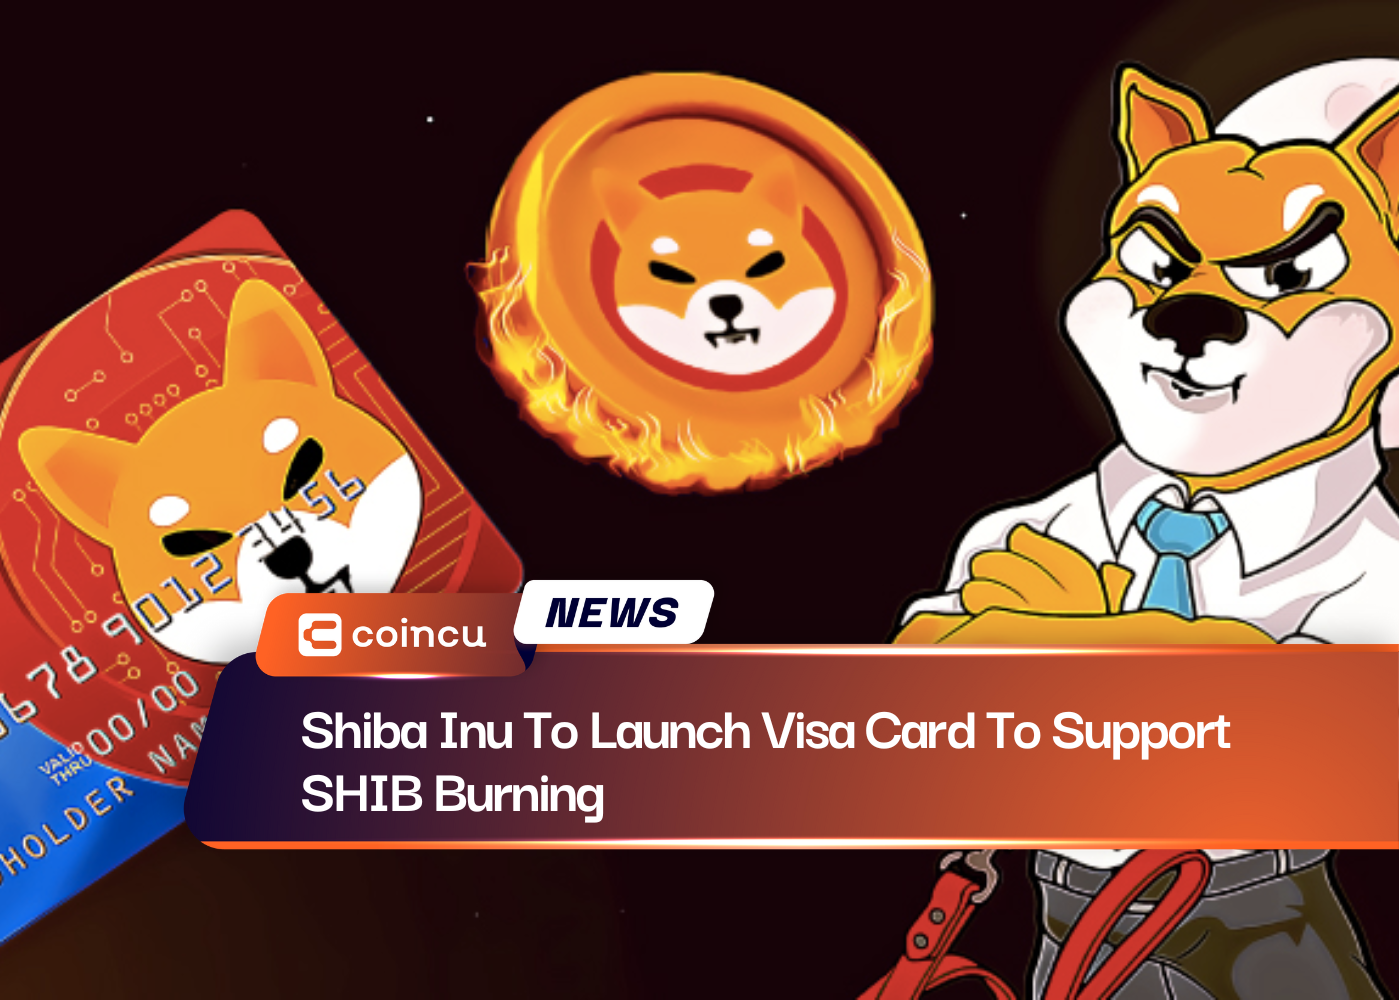 Shiba Inu To Launch Visa Card To Support SHIB Burning